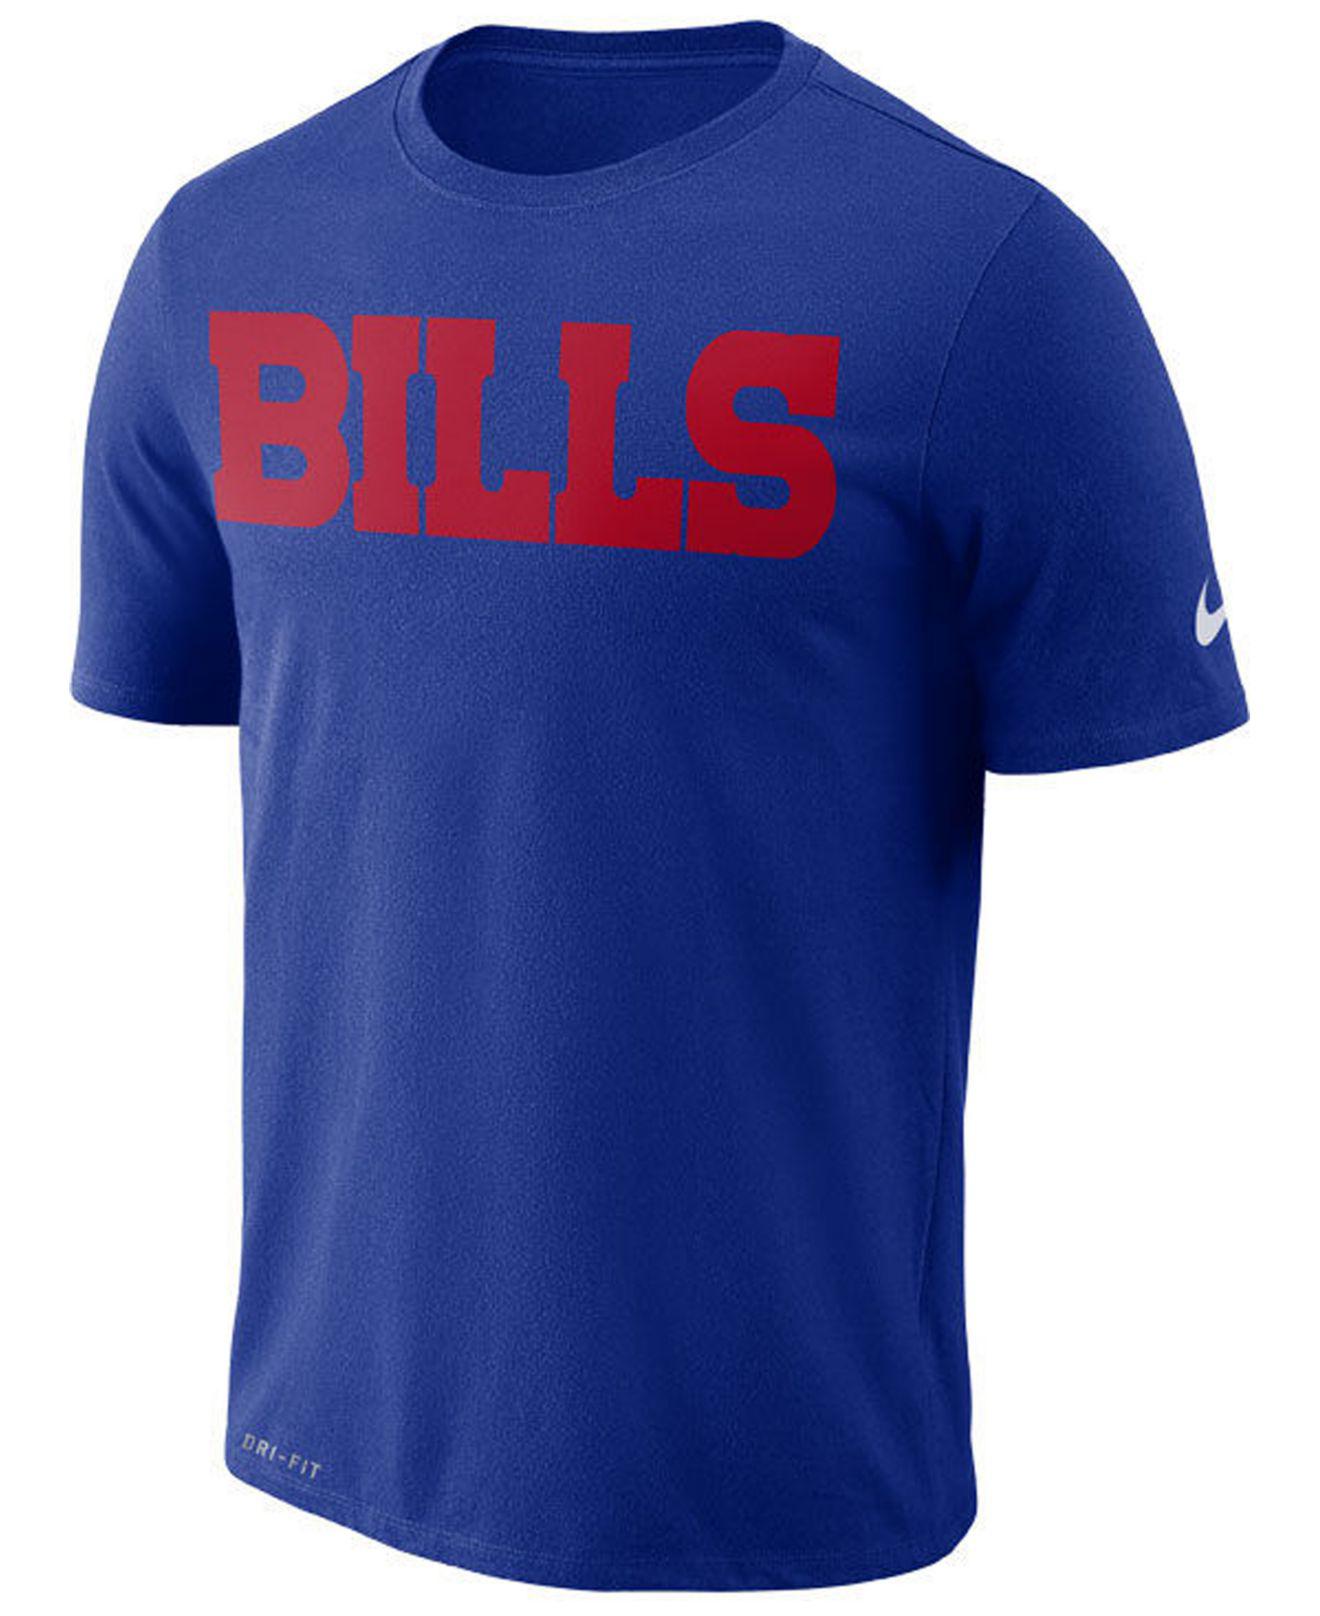 buffalo bills dri fit shirt